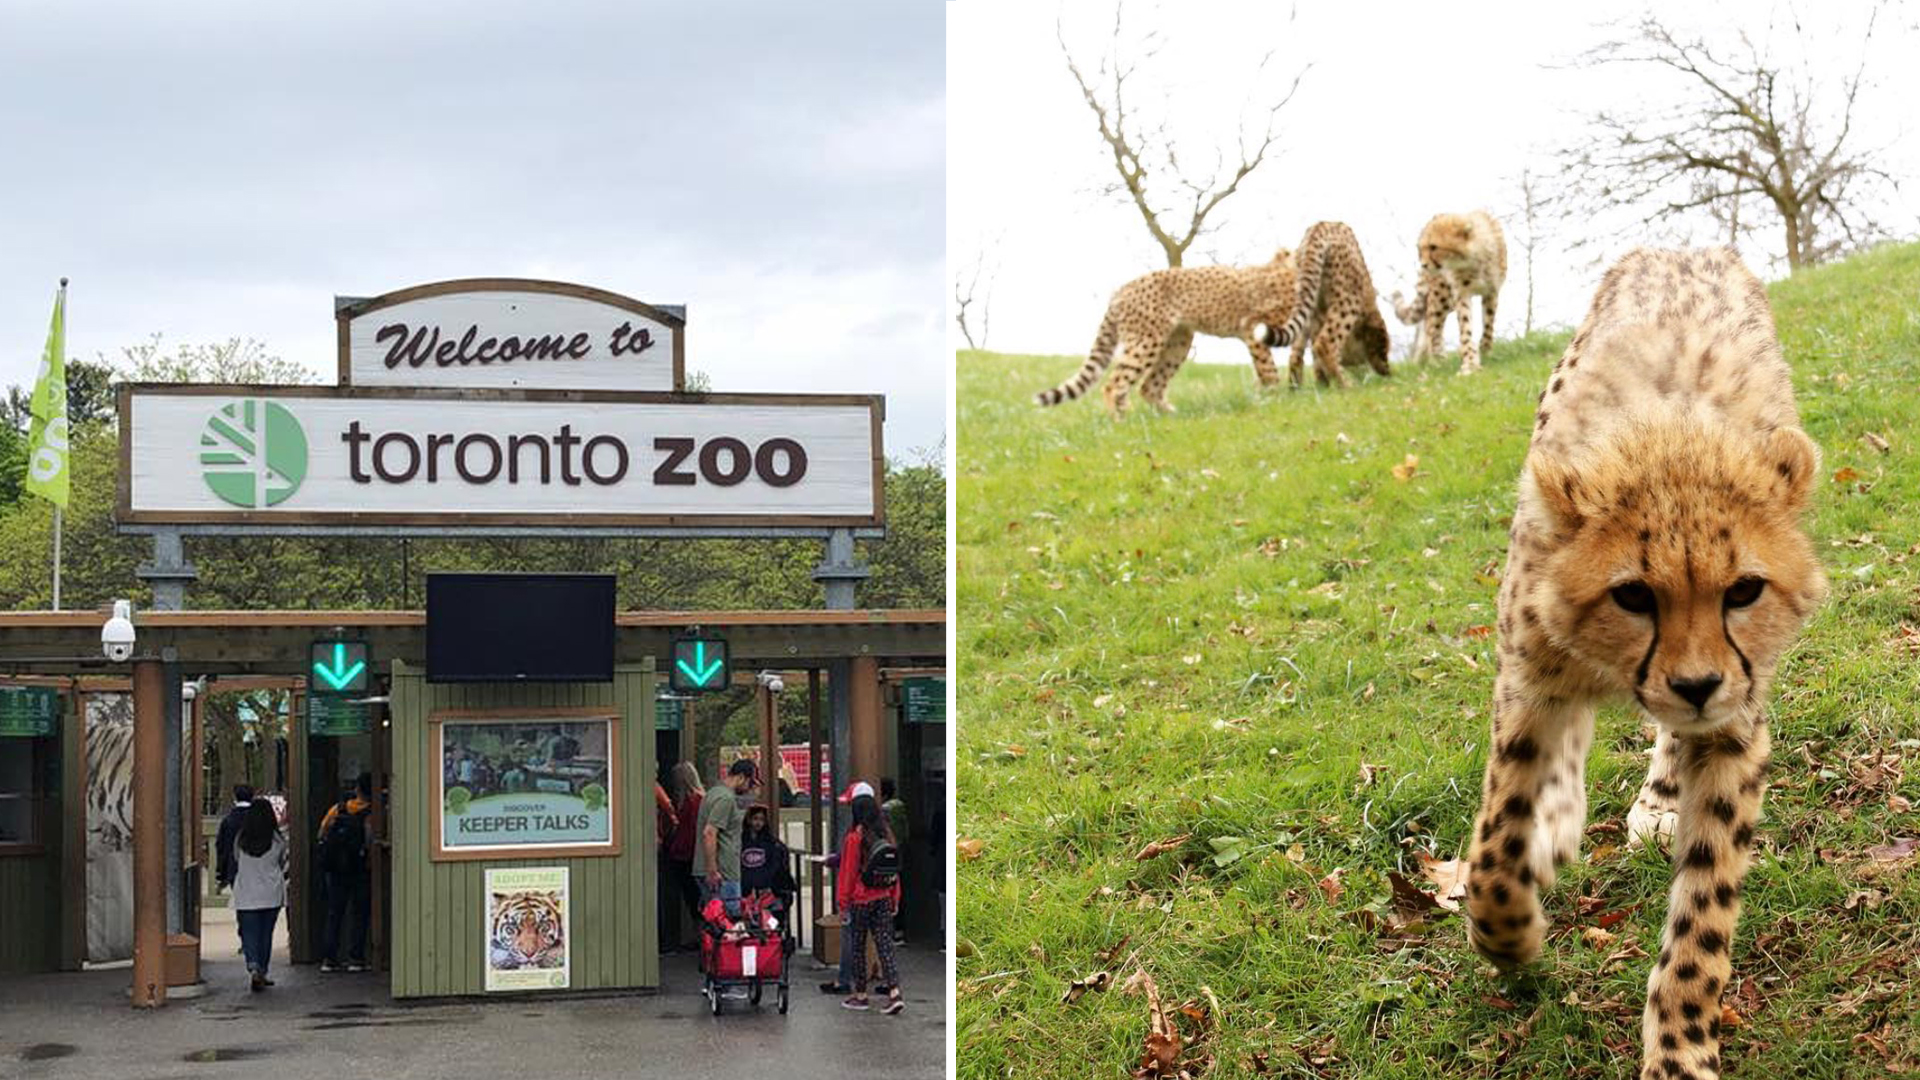 The Toronto Zoo's New DriveThru Safari Opens This Weekend